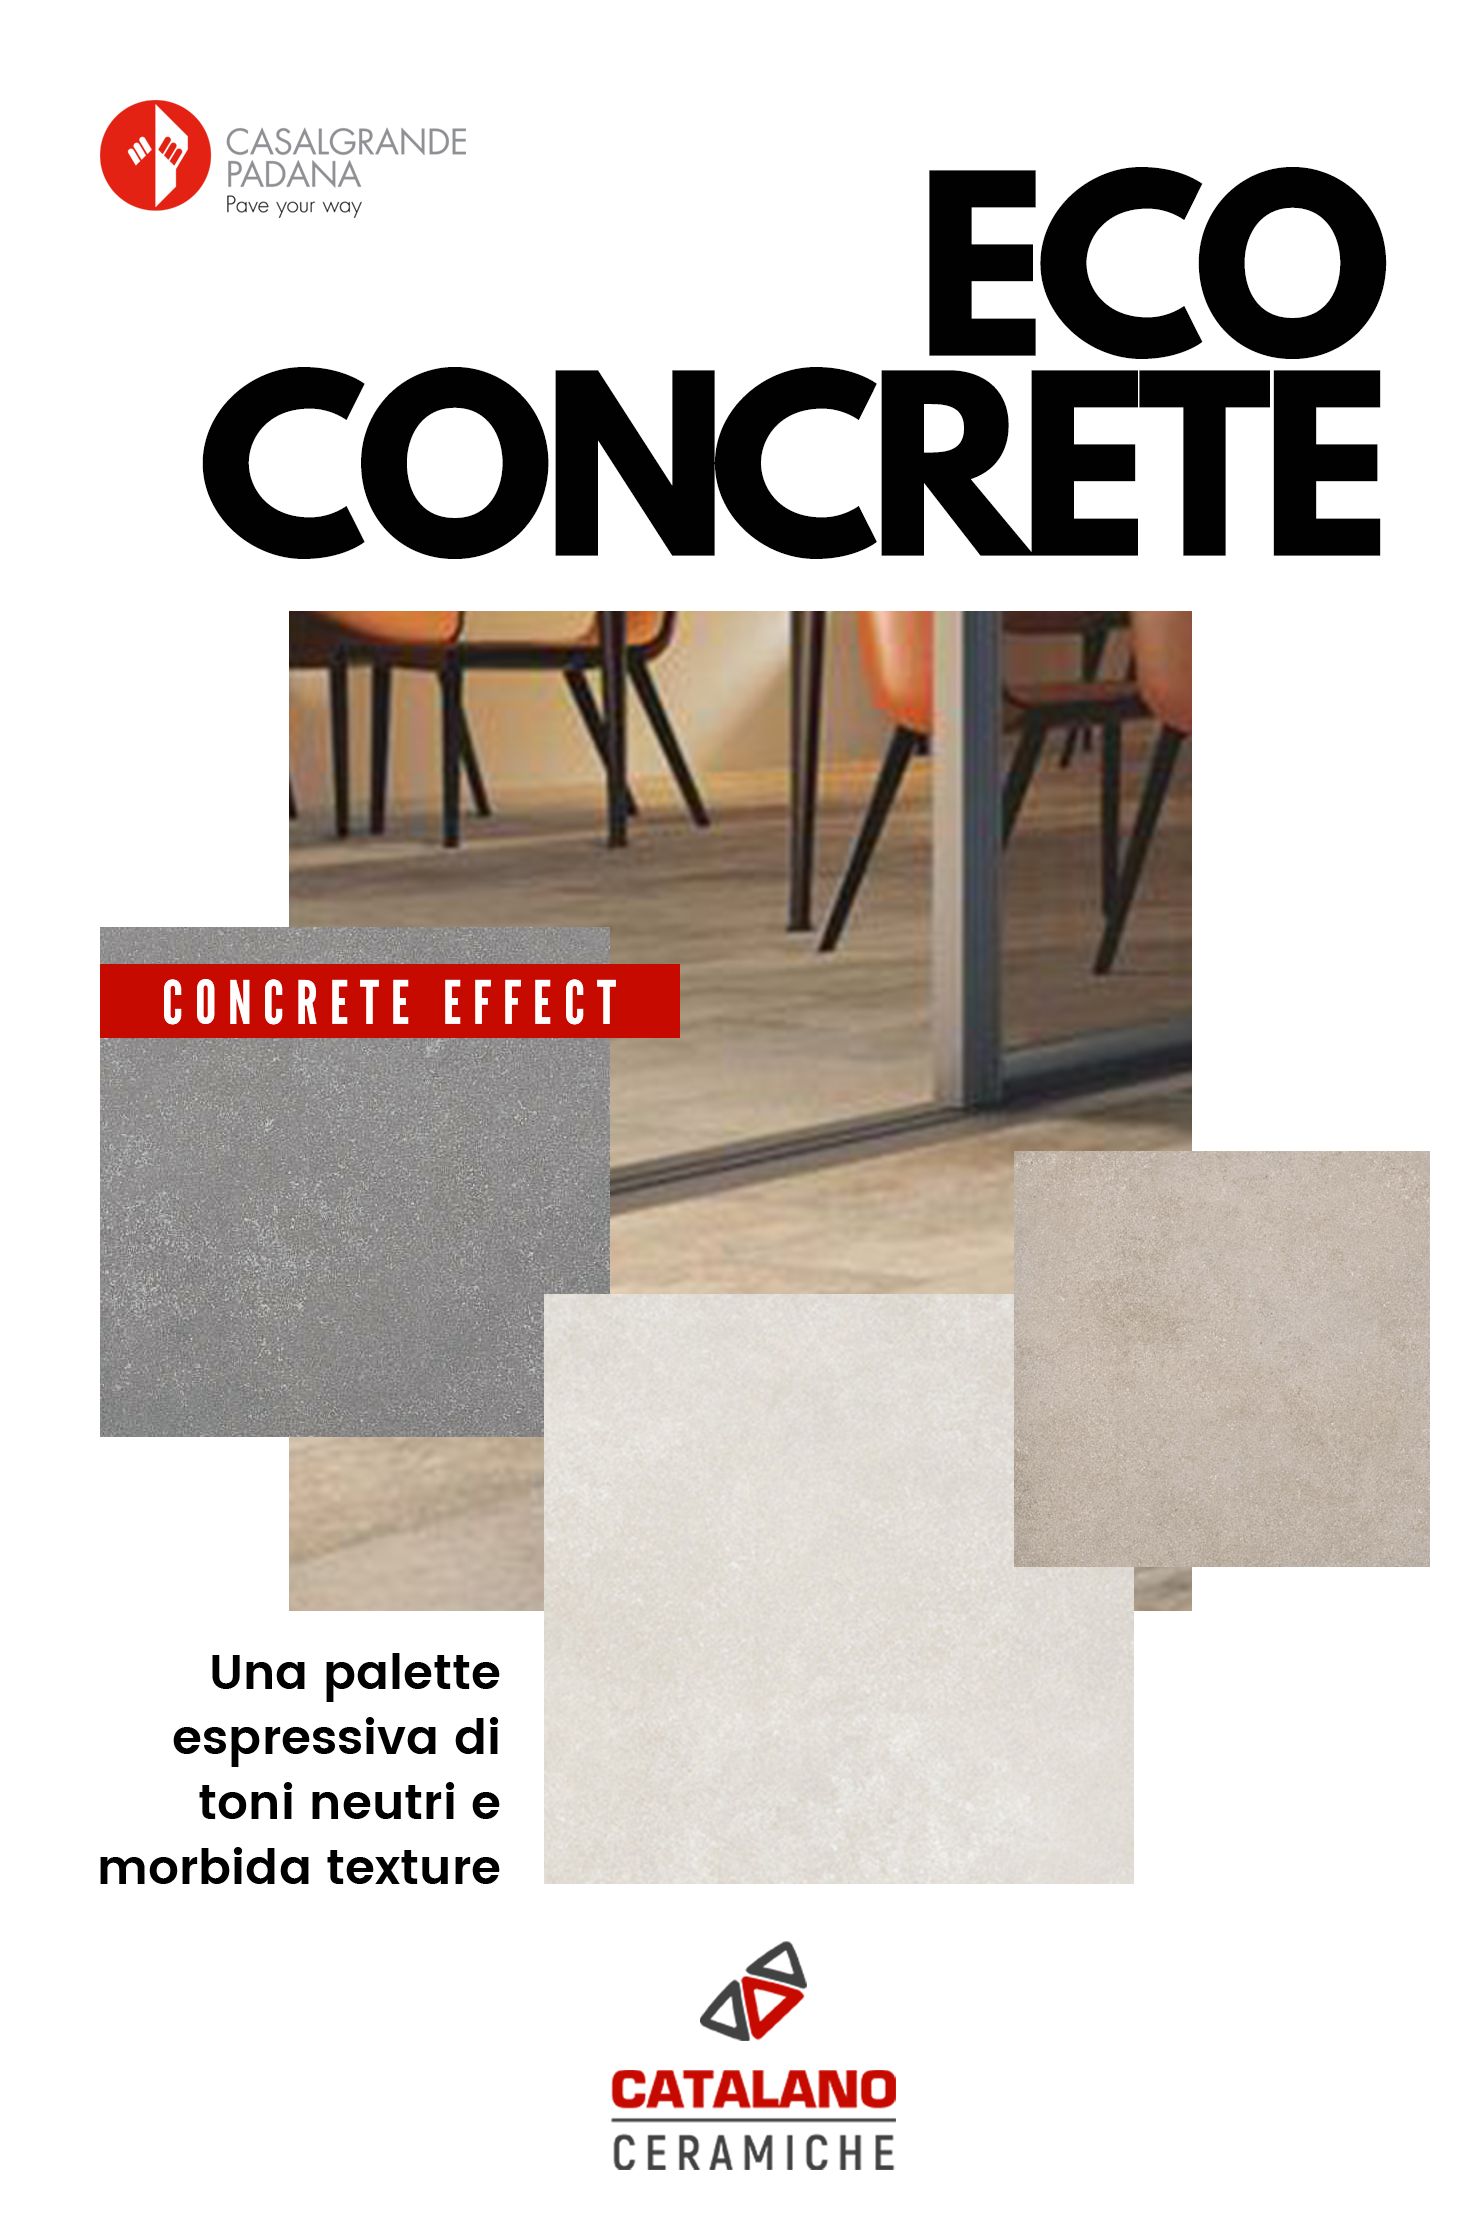 Eco concrete - Casalgrande Padana